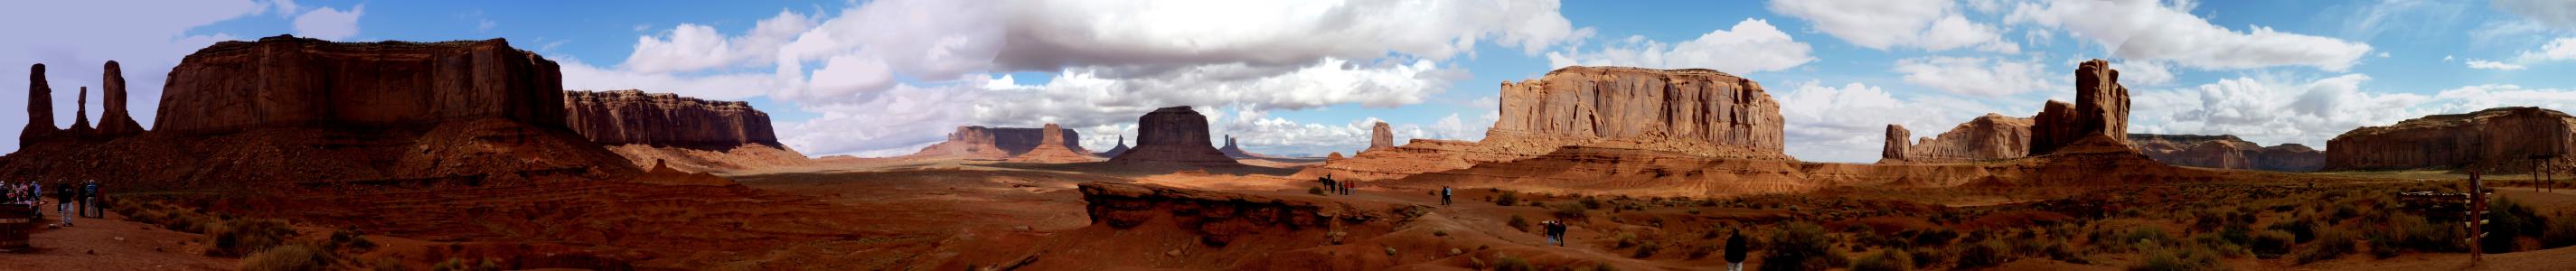 Name: Monument Valley1 Camera make:  Model:  Software: Picasa 3.0